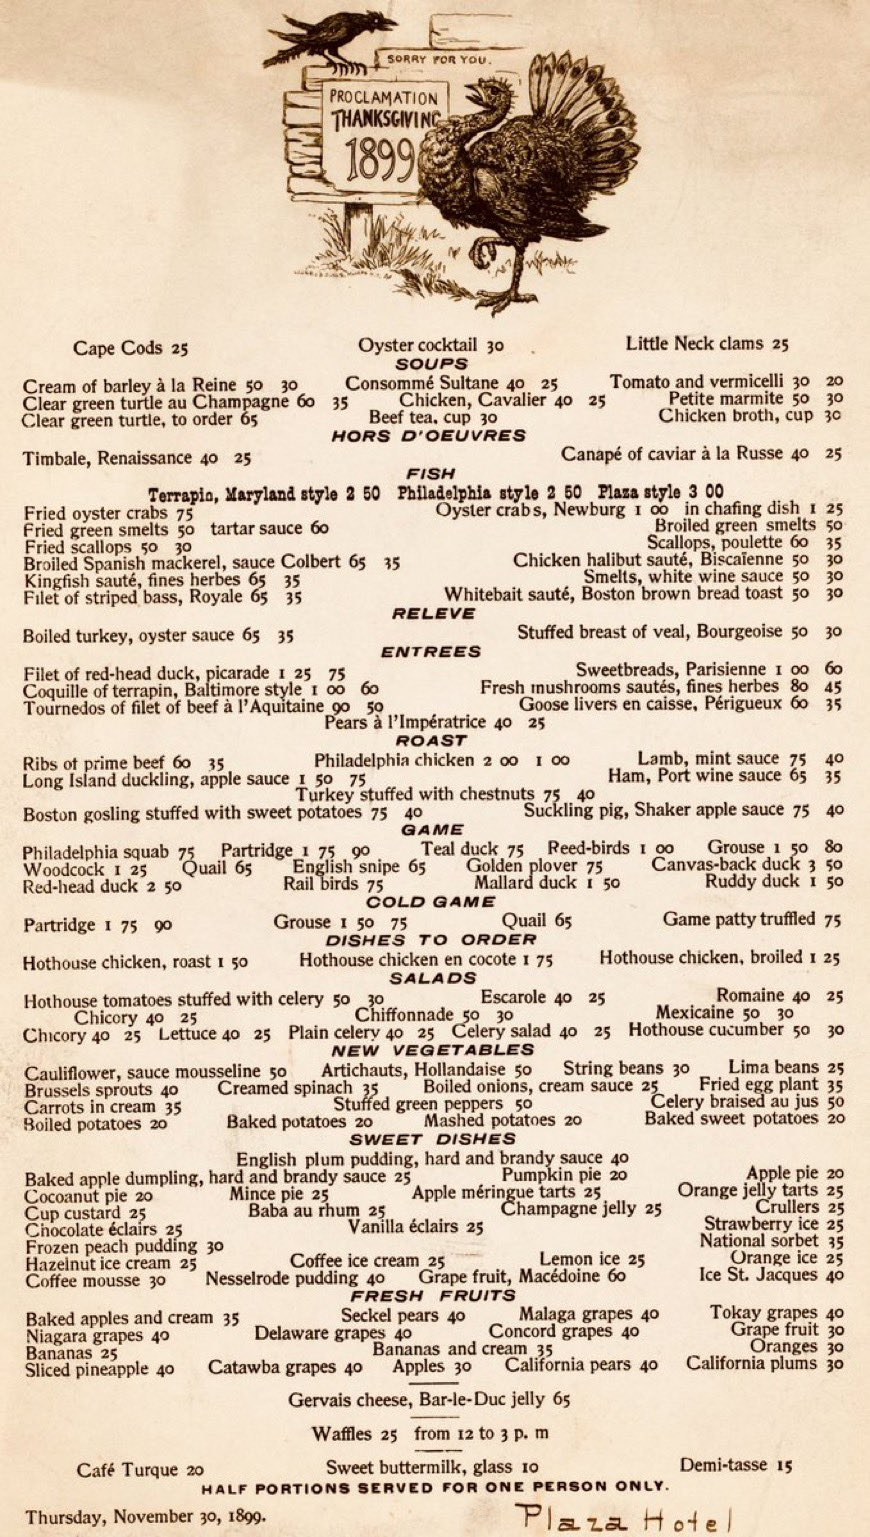 Thanksgiving menu at the Plaza Hotel for Thursday, November 30, 1899